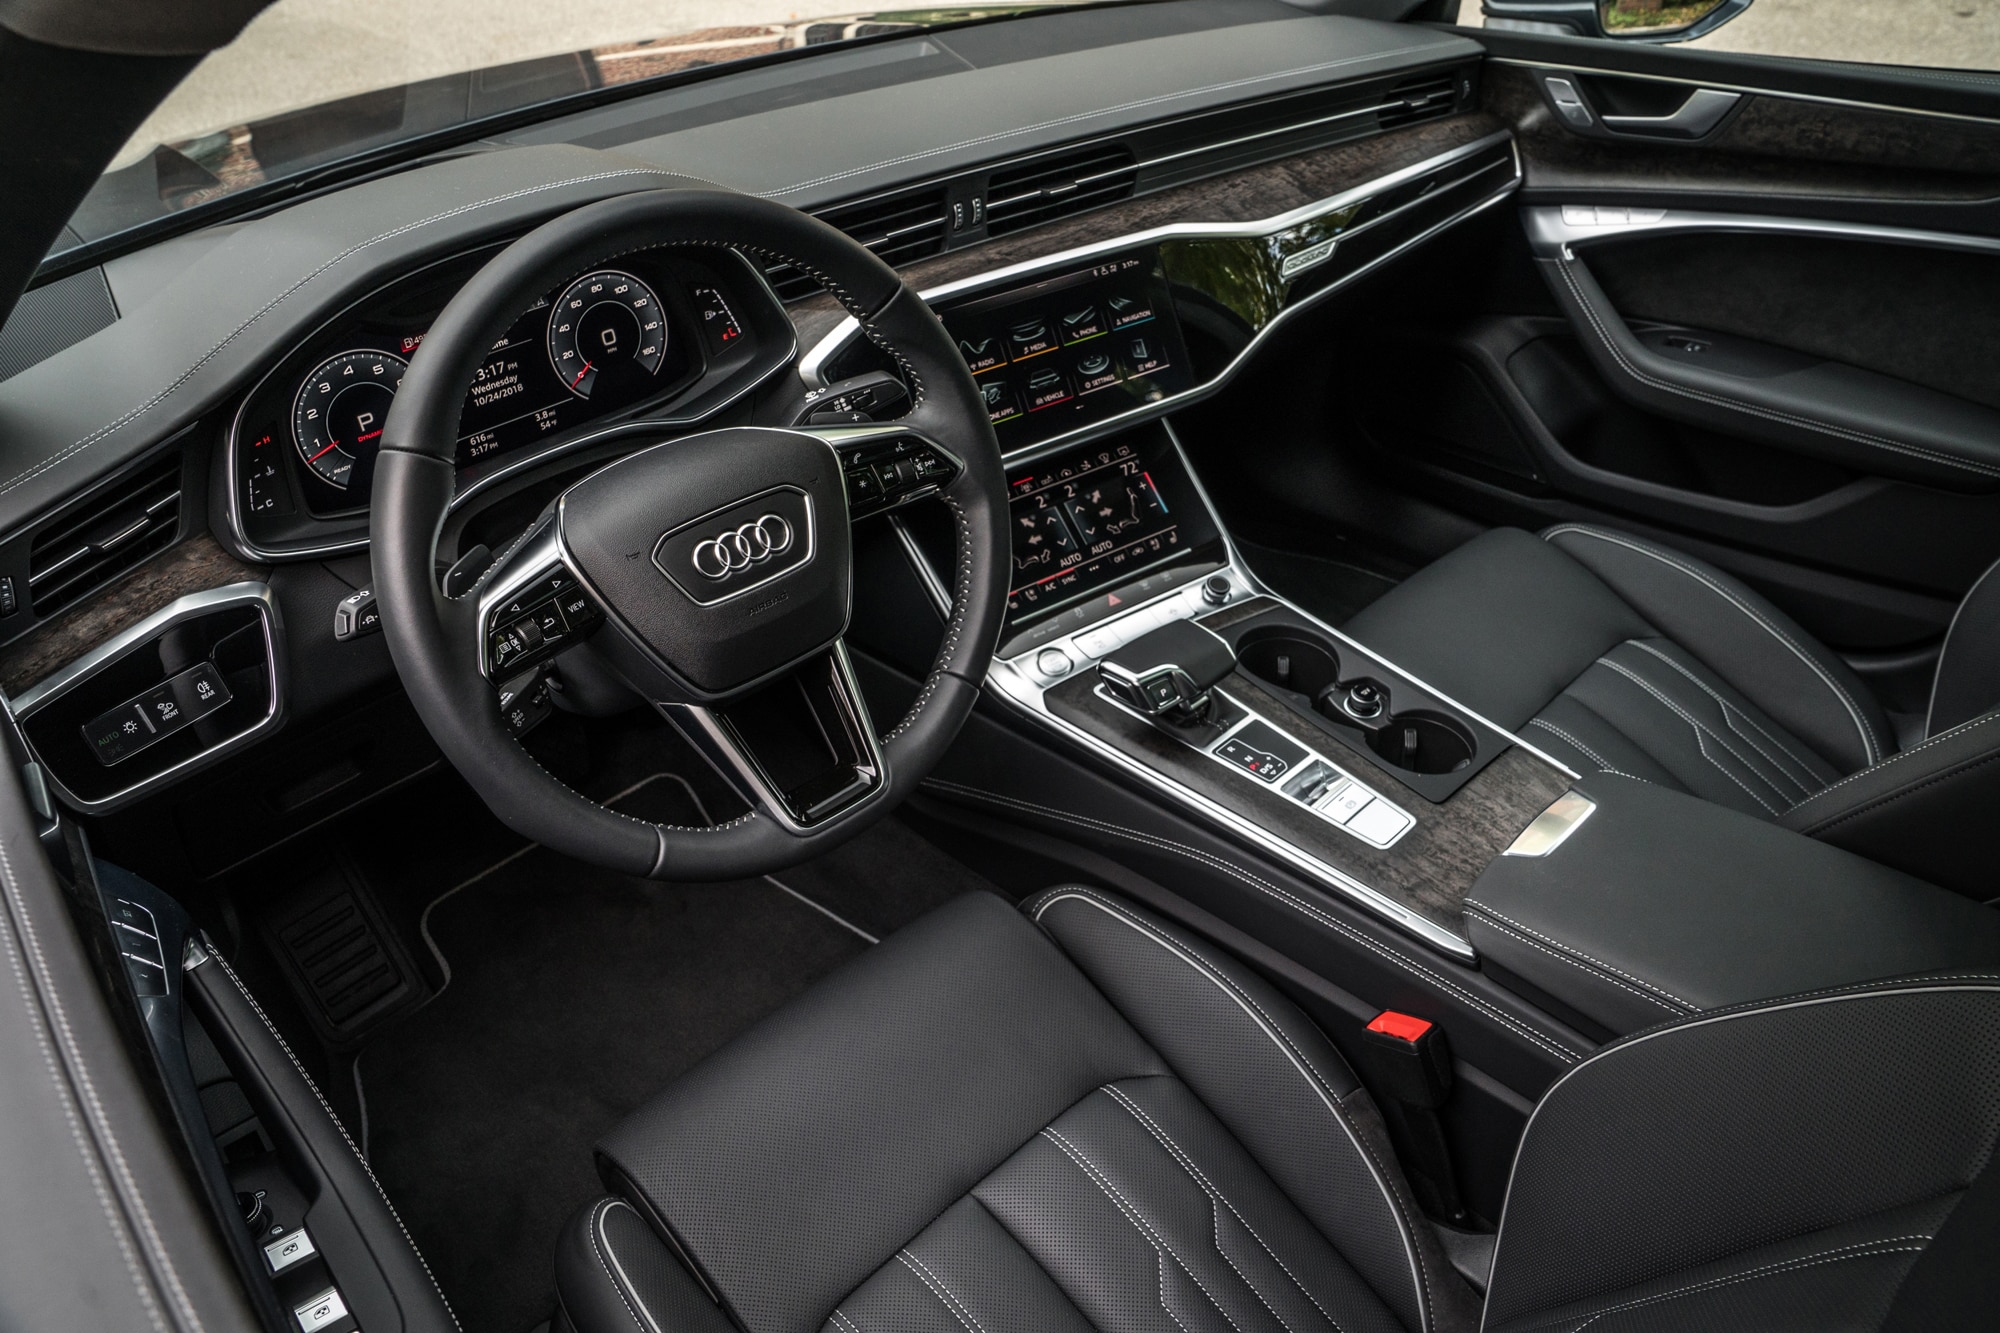 2022 Audi A6 interior and dashboard